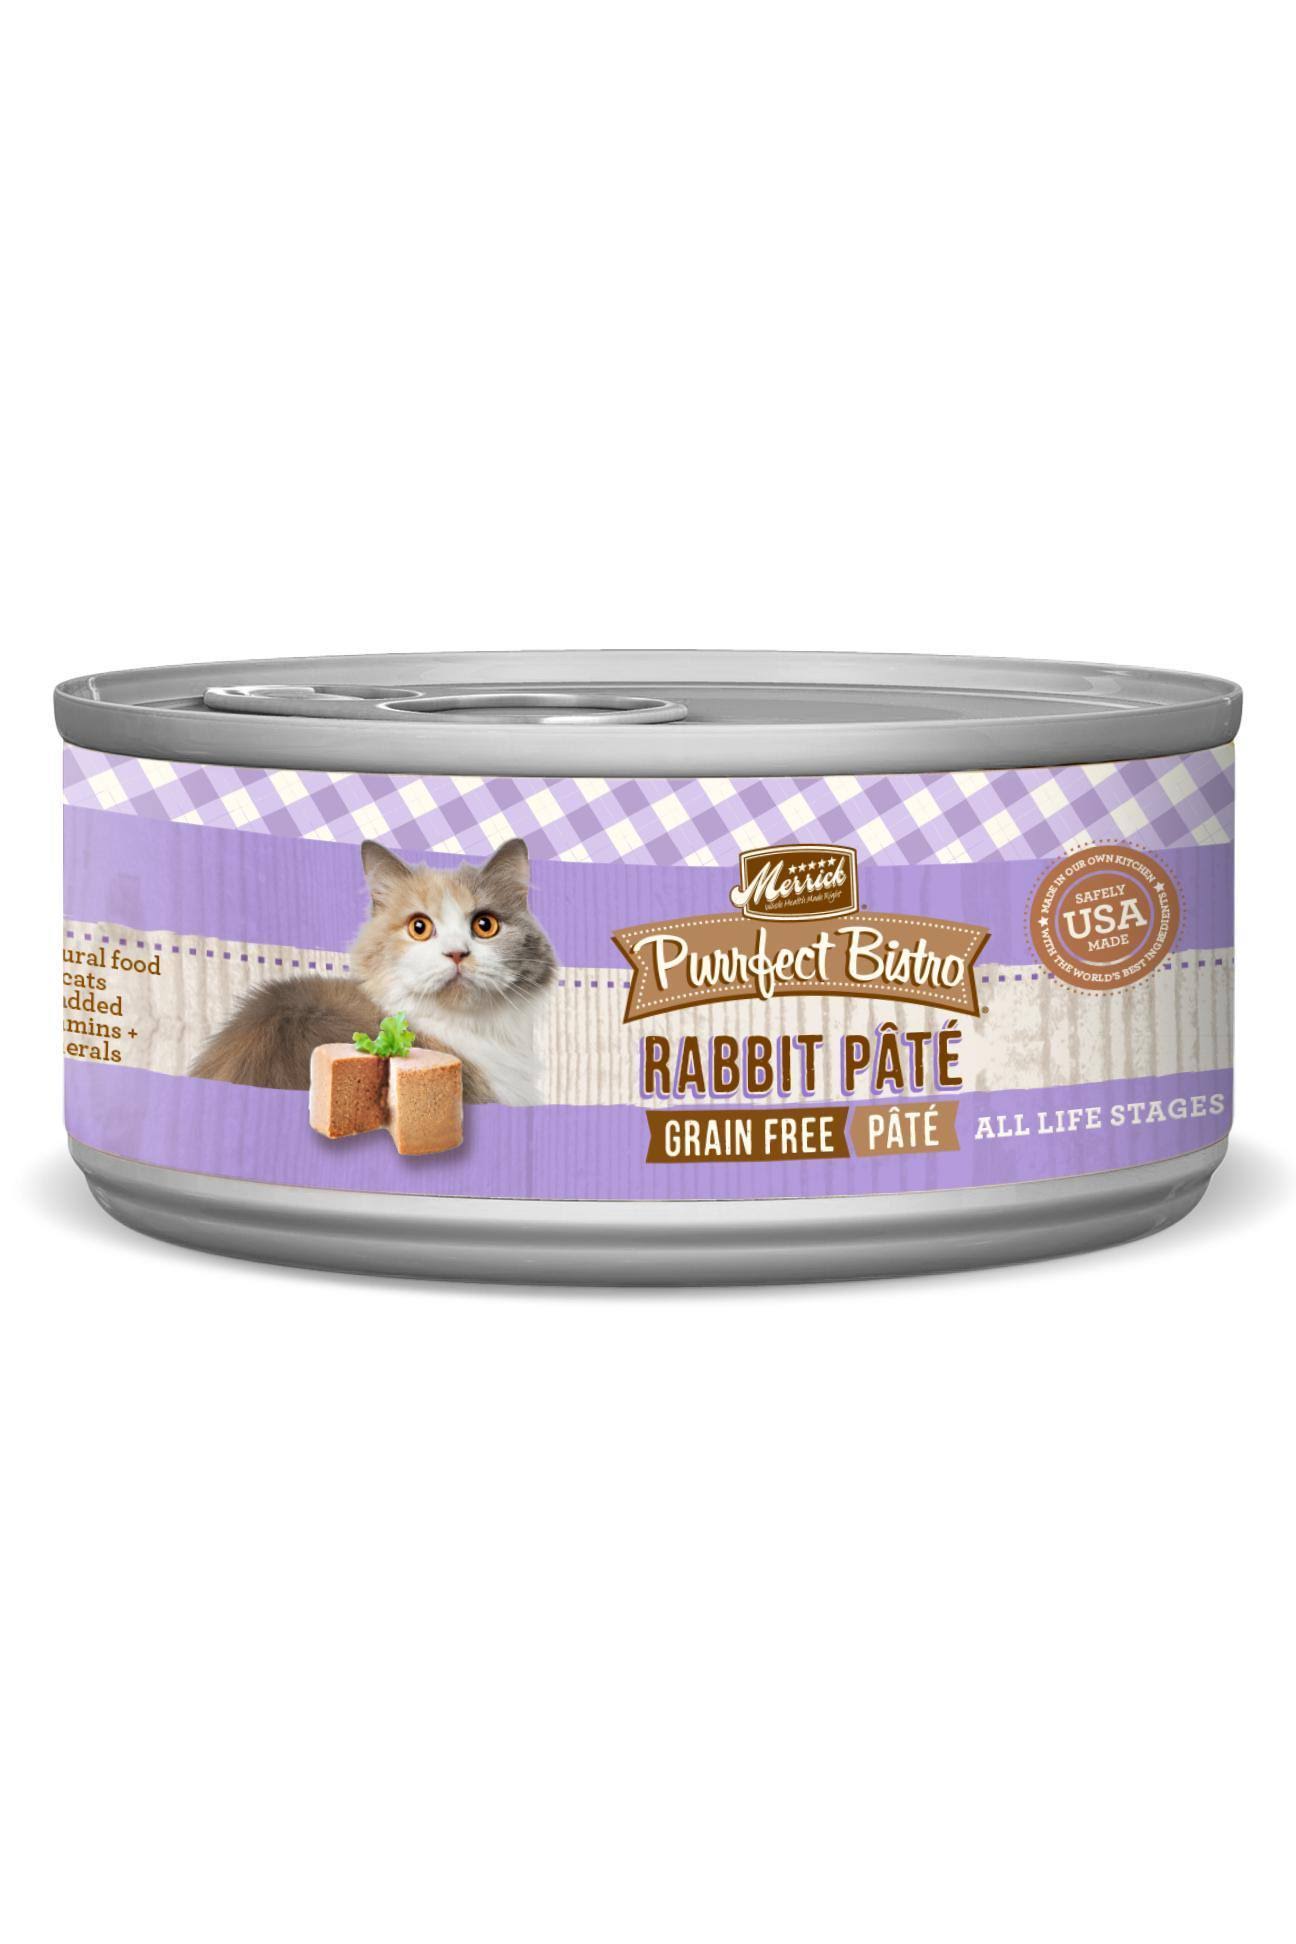 Merrick Purrfect Bistro Cat Food - Rabbit Pate, 5.5oz